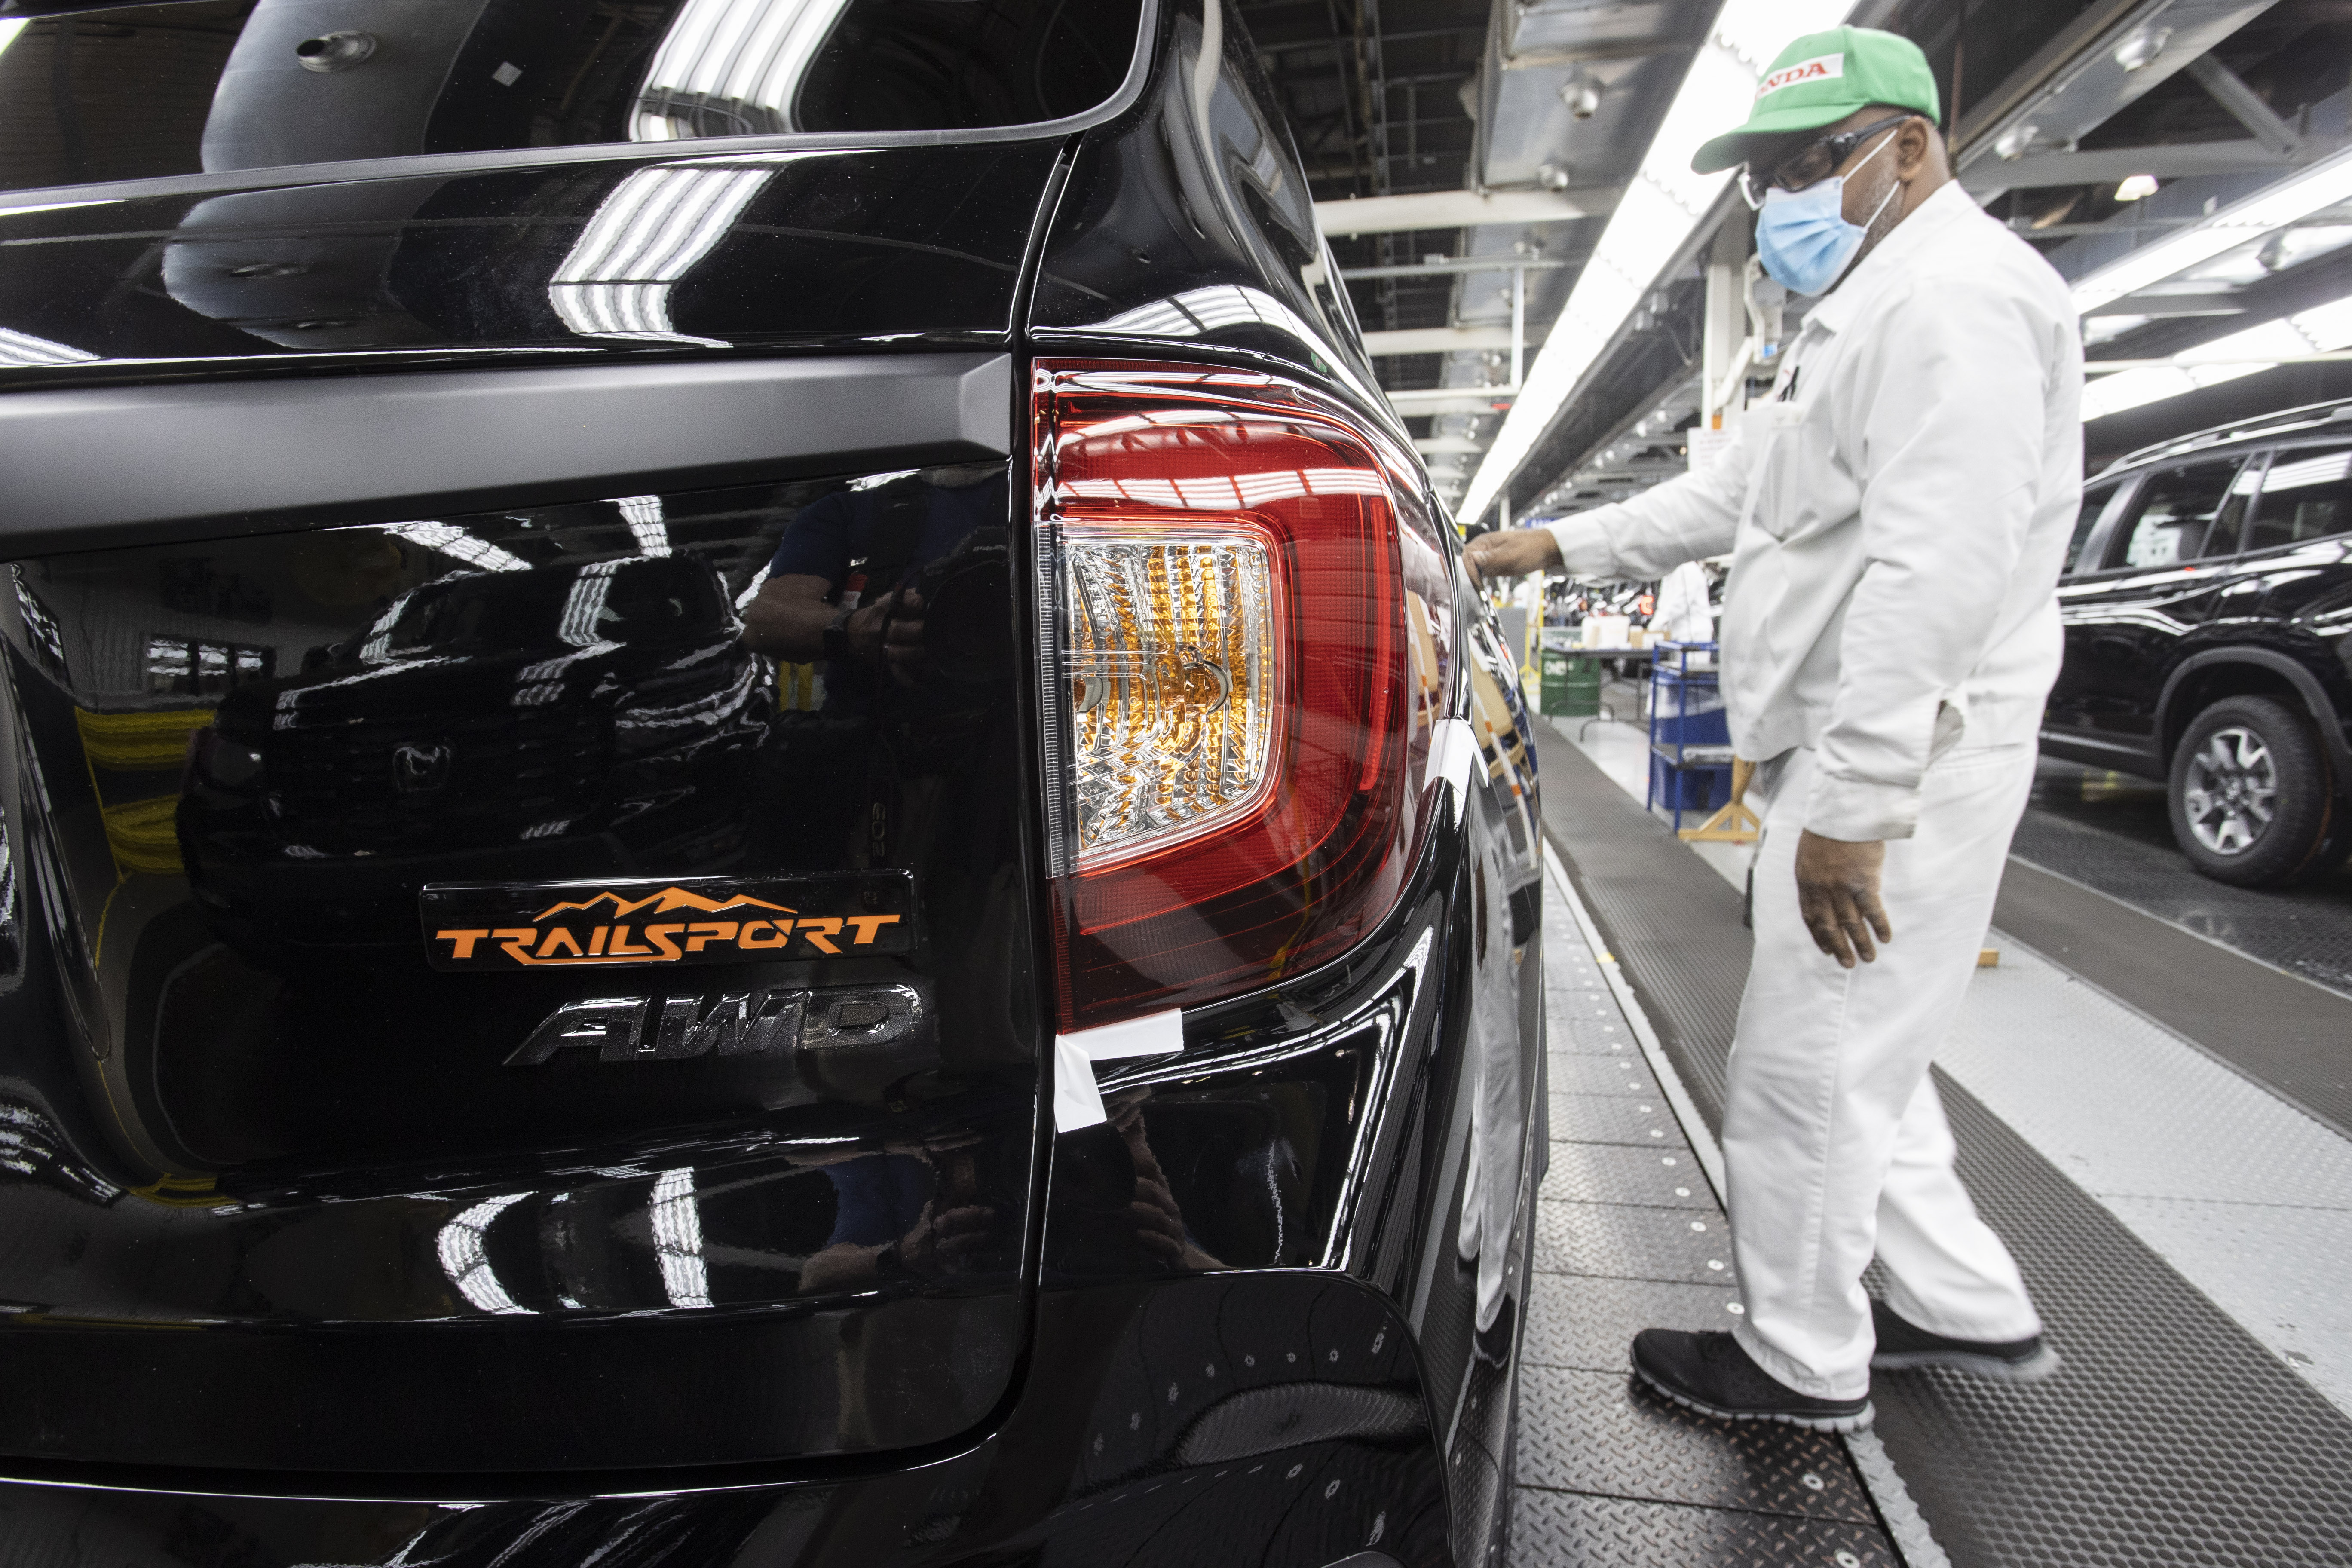 Honda Alabama Auto Plant Begins Production of 2022 Honda Passport and First-Ever Passport TrailSport Model